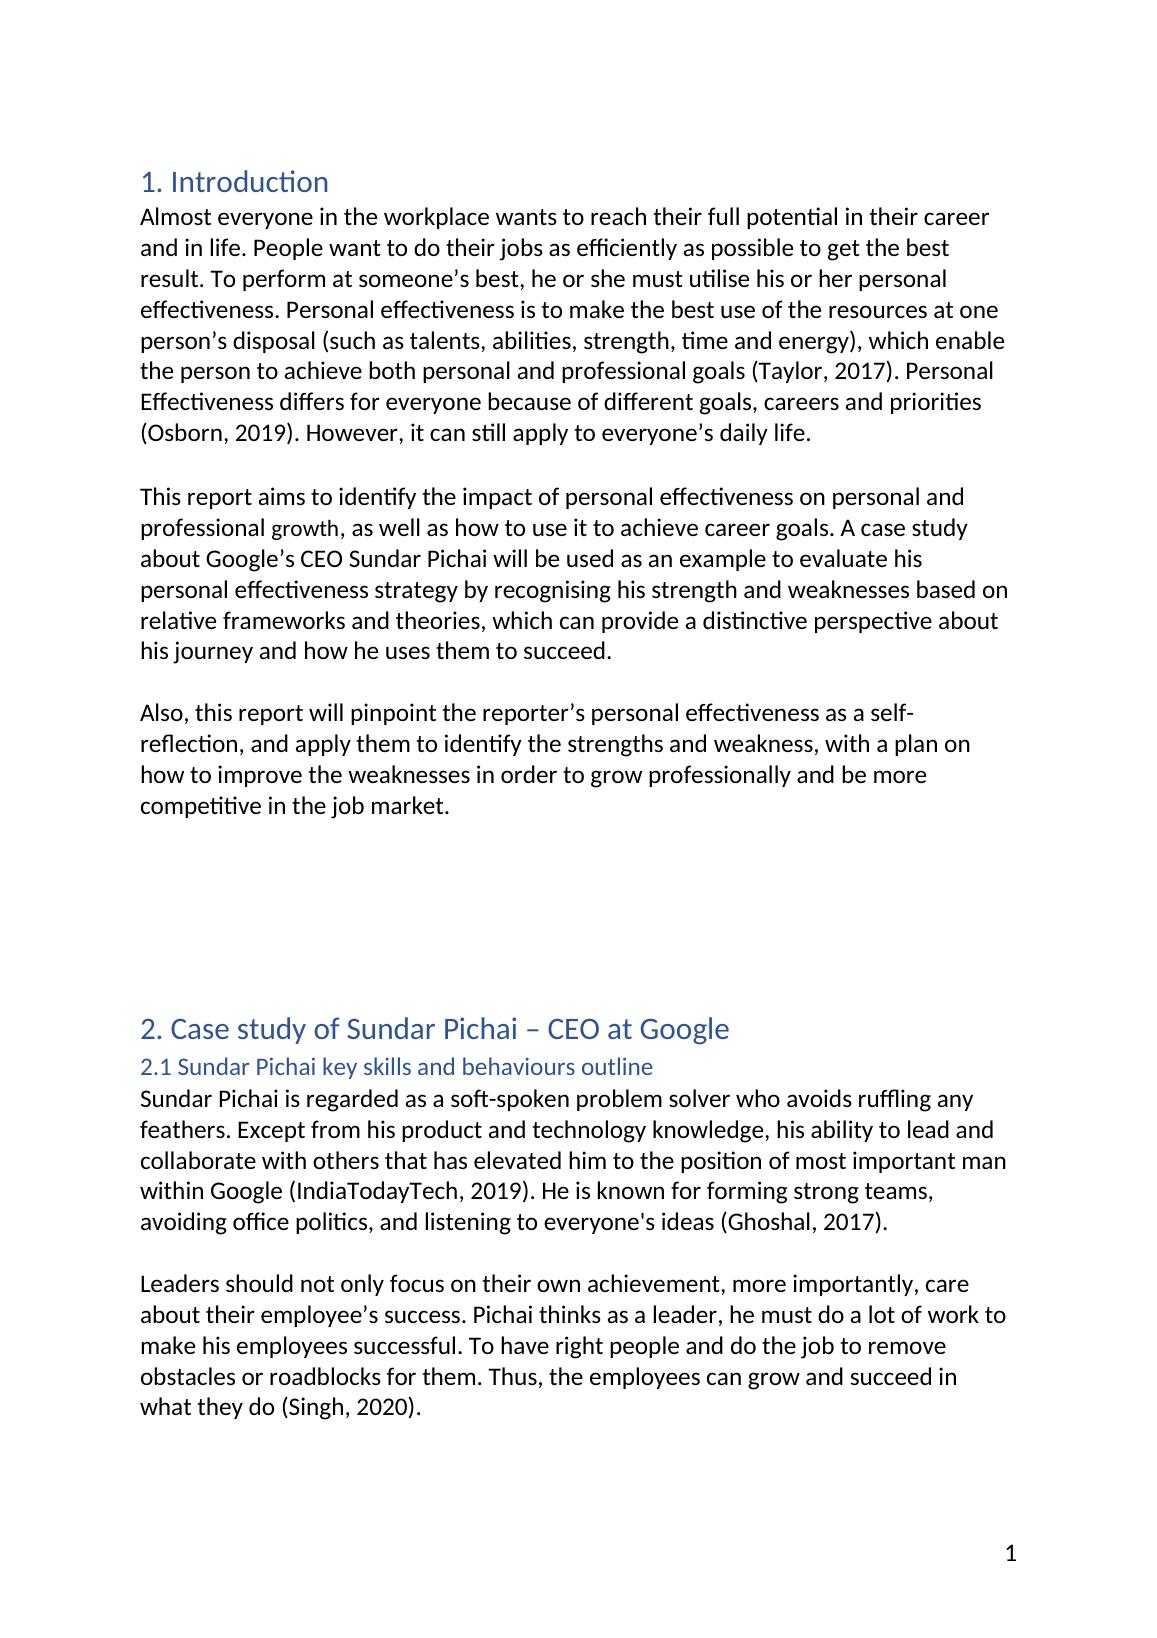 Personal Effectiveness - Sundar Pichai (CEO At Google)_4